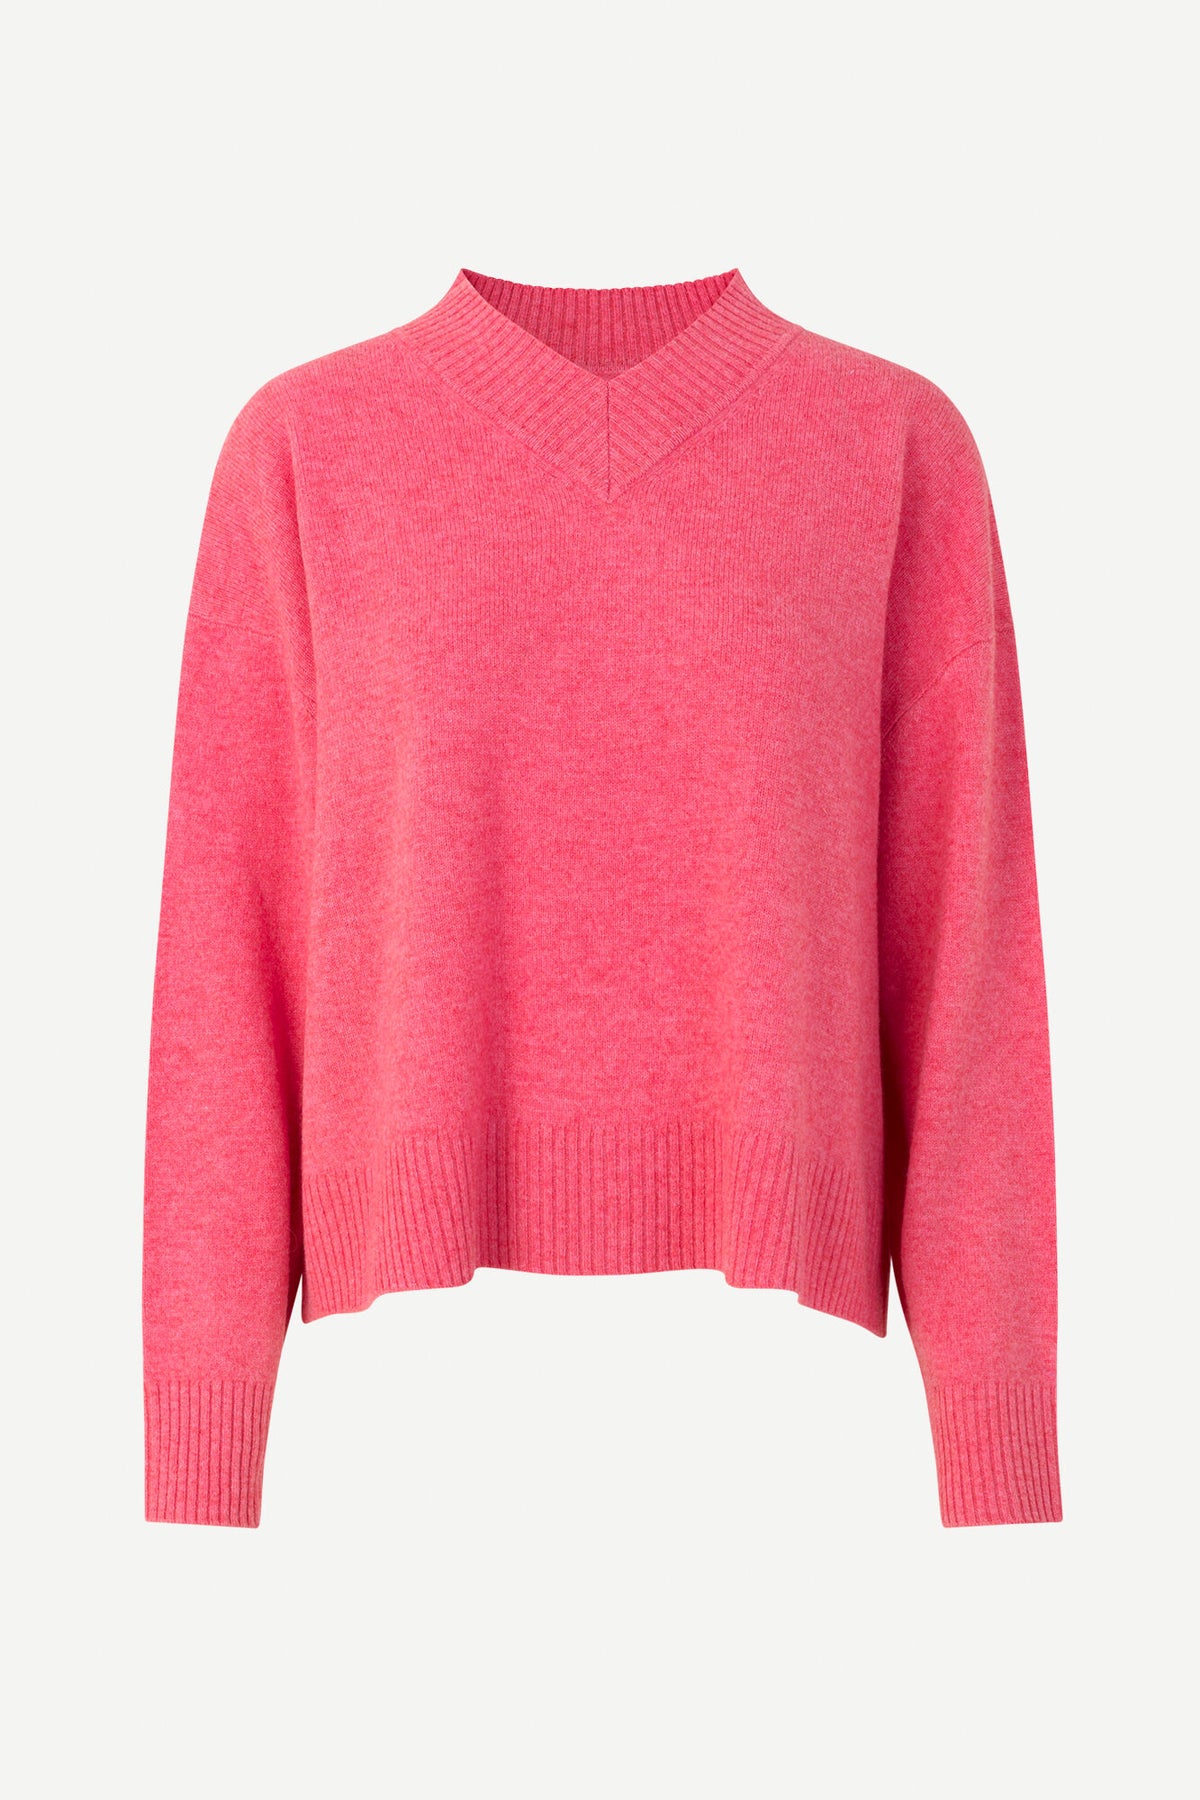 Hot pink V neck jumper with long sleeves and a drop shoulder